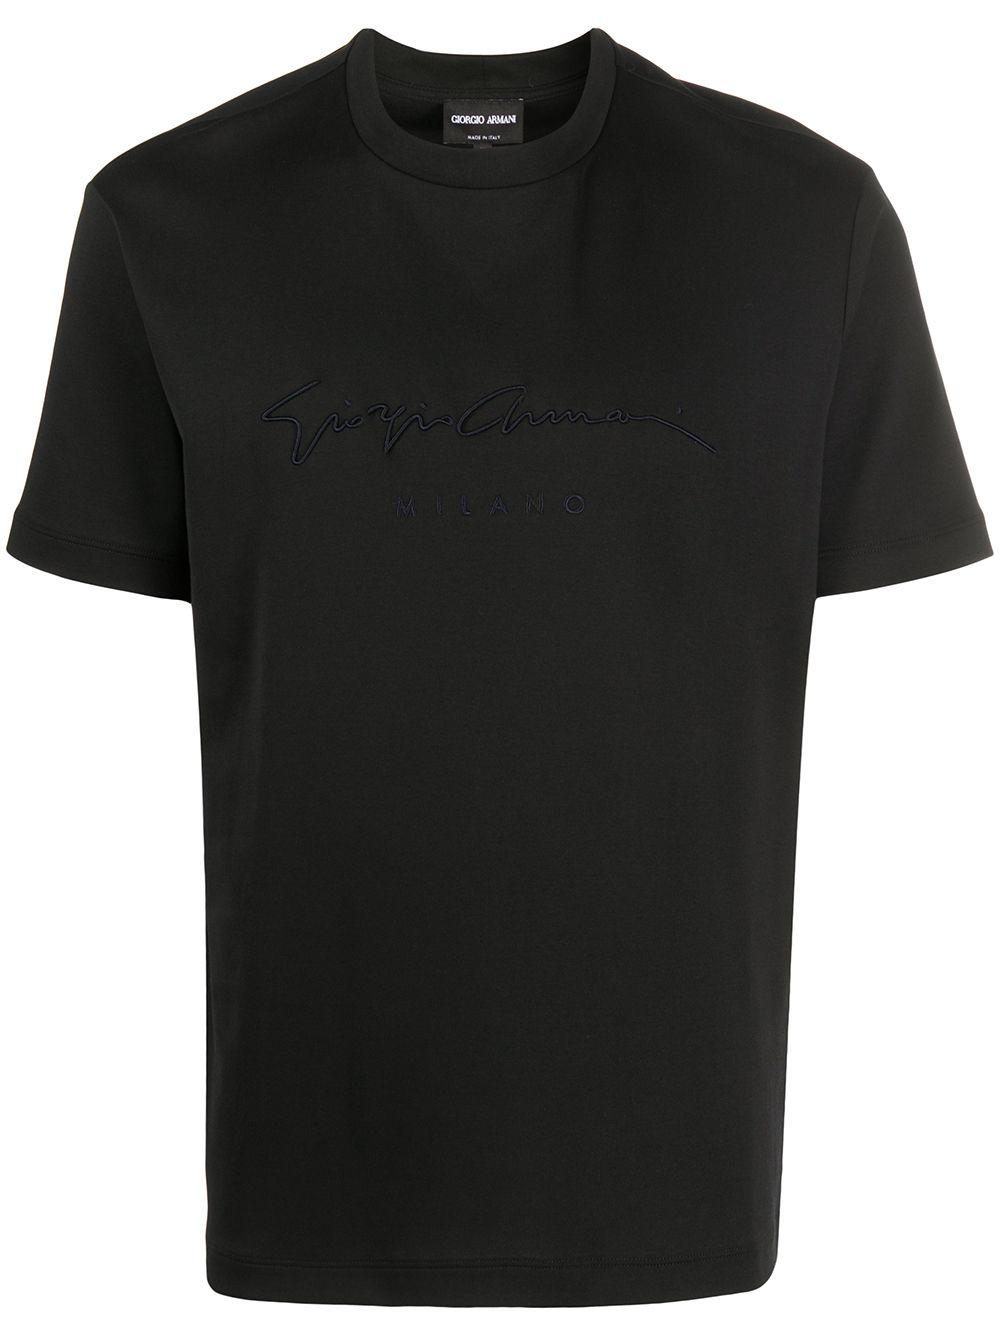 Giorgio Armani Cotton Embroidered Logo T-shirt in Black for Men - Lyst